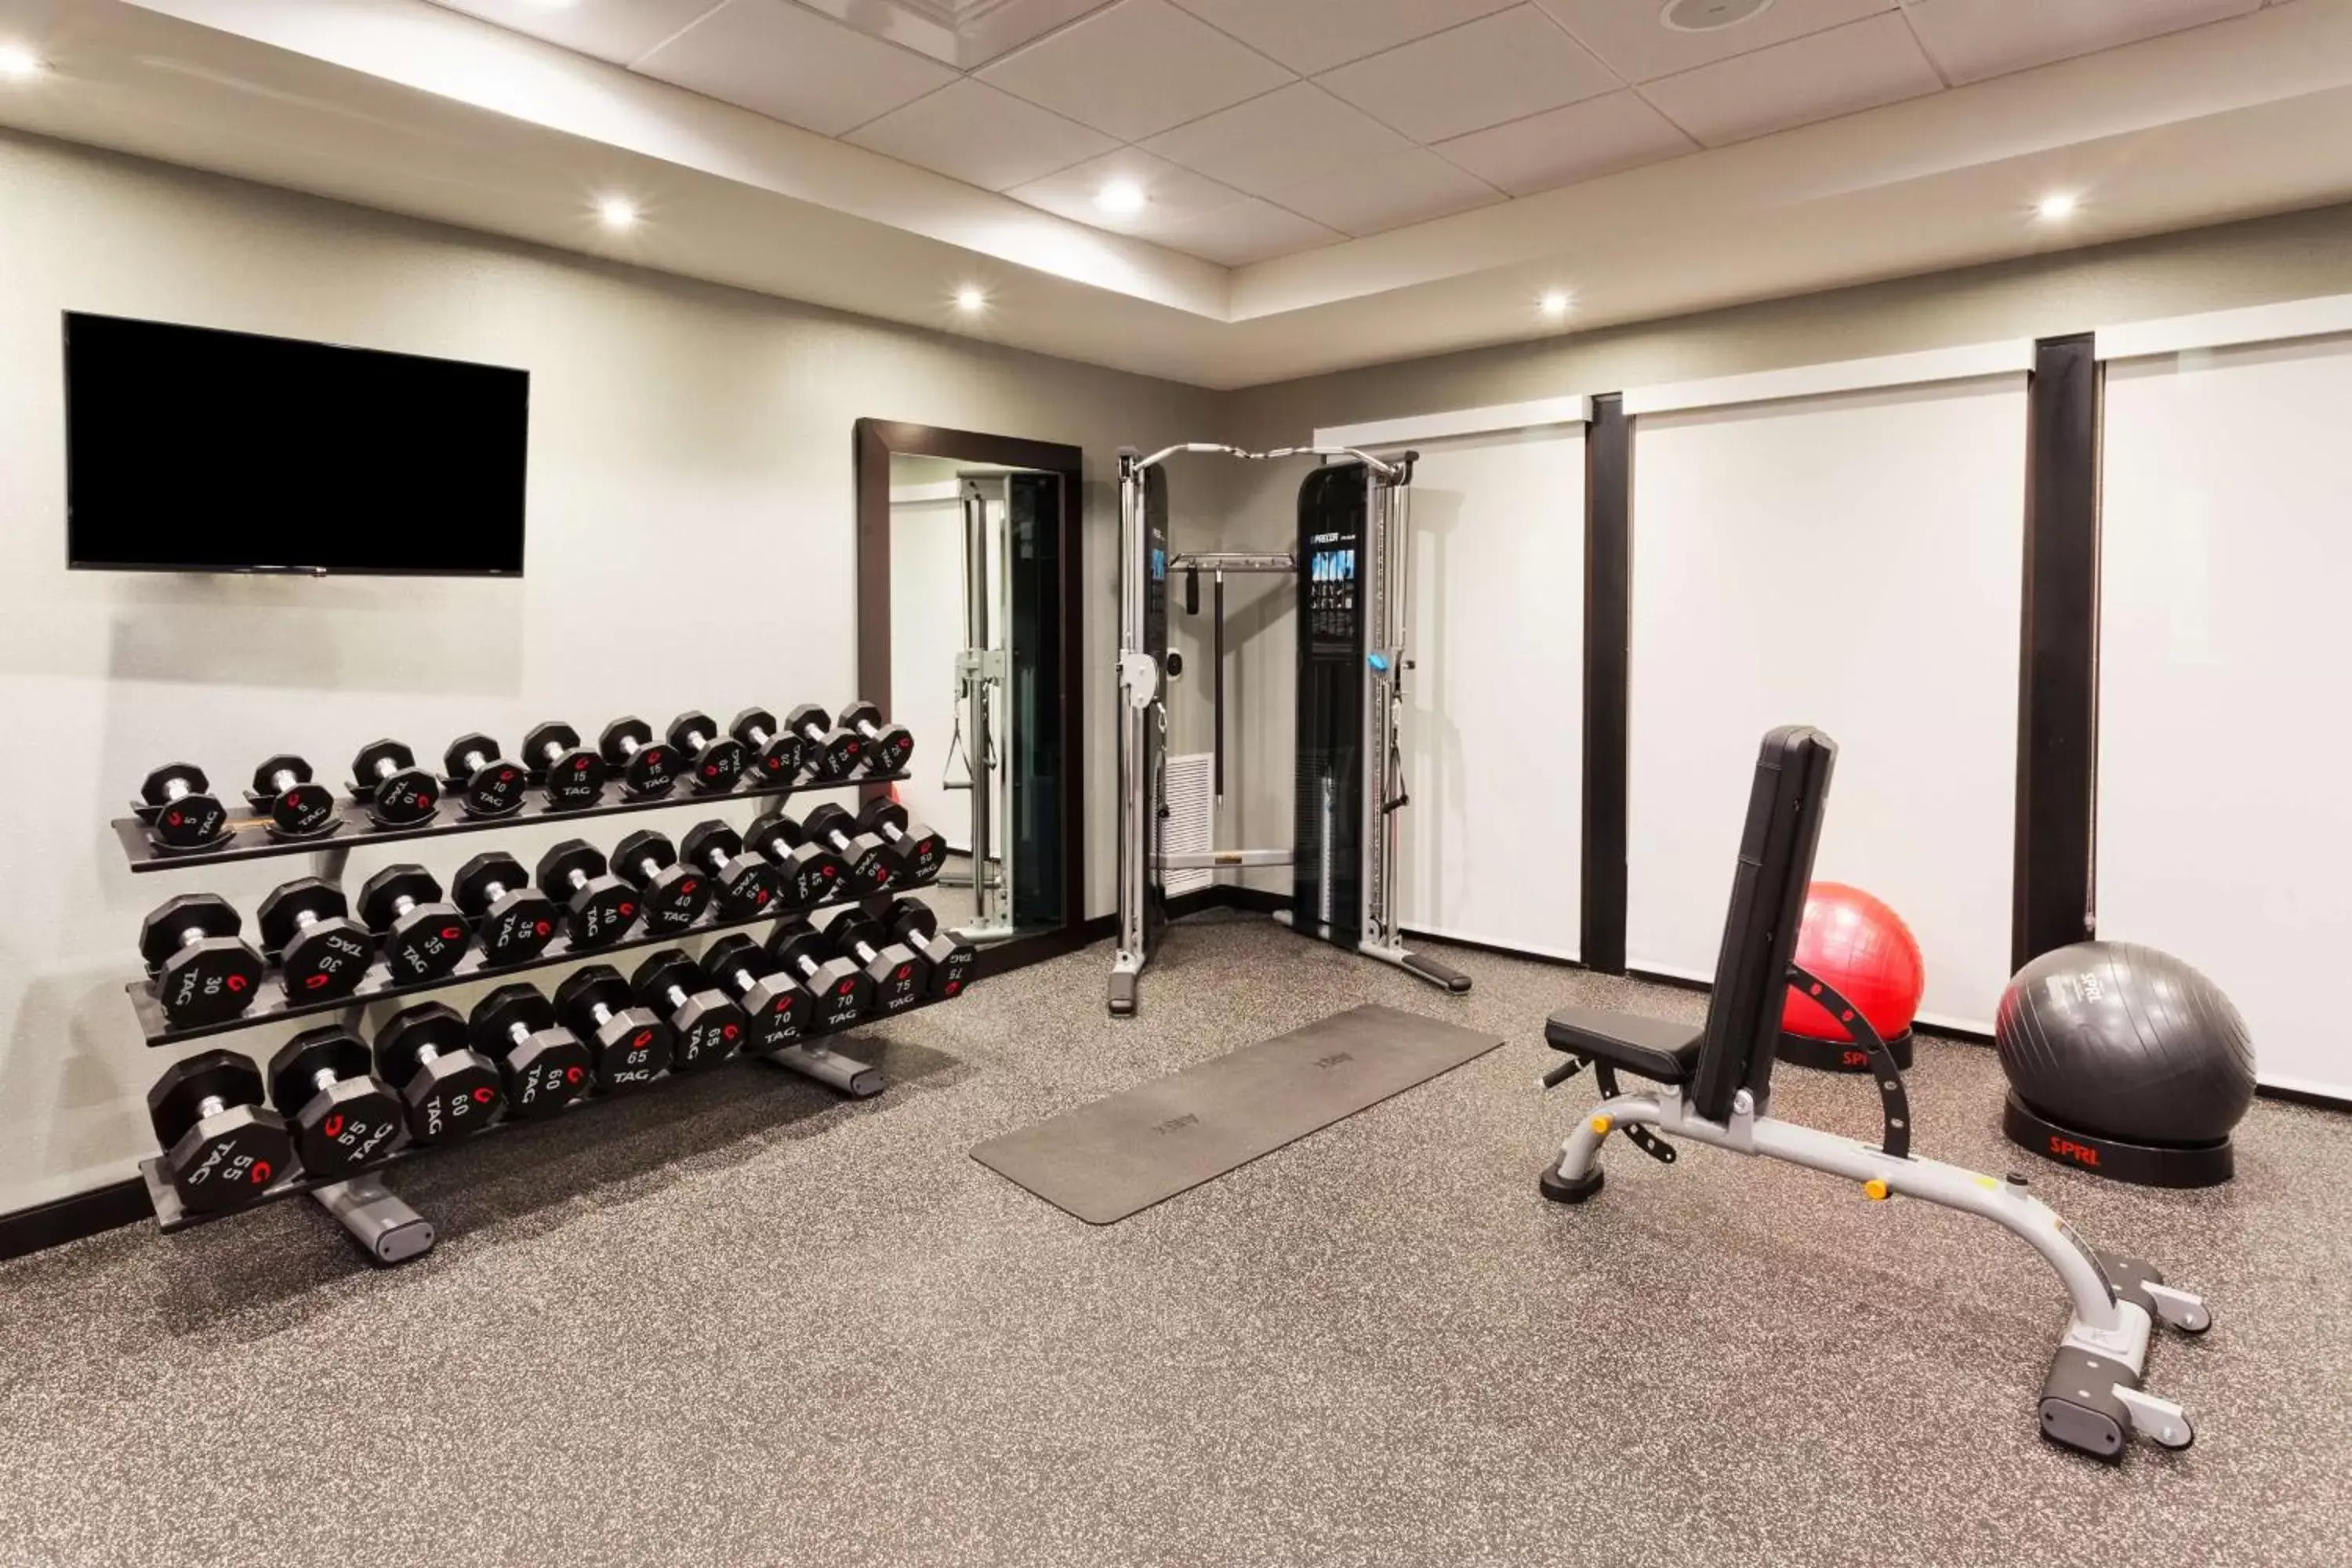 Fitness centre/facilities, Fitness Center/Facilities in Home2 Suites By Hilton Alpharetta, Ga